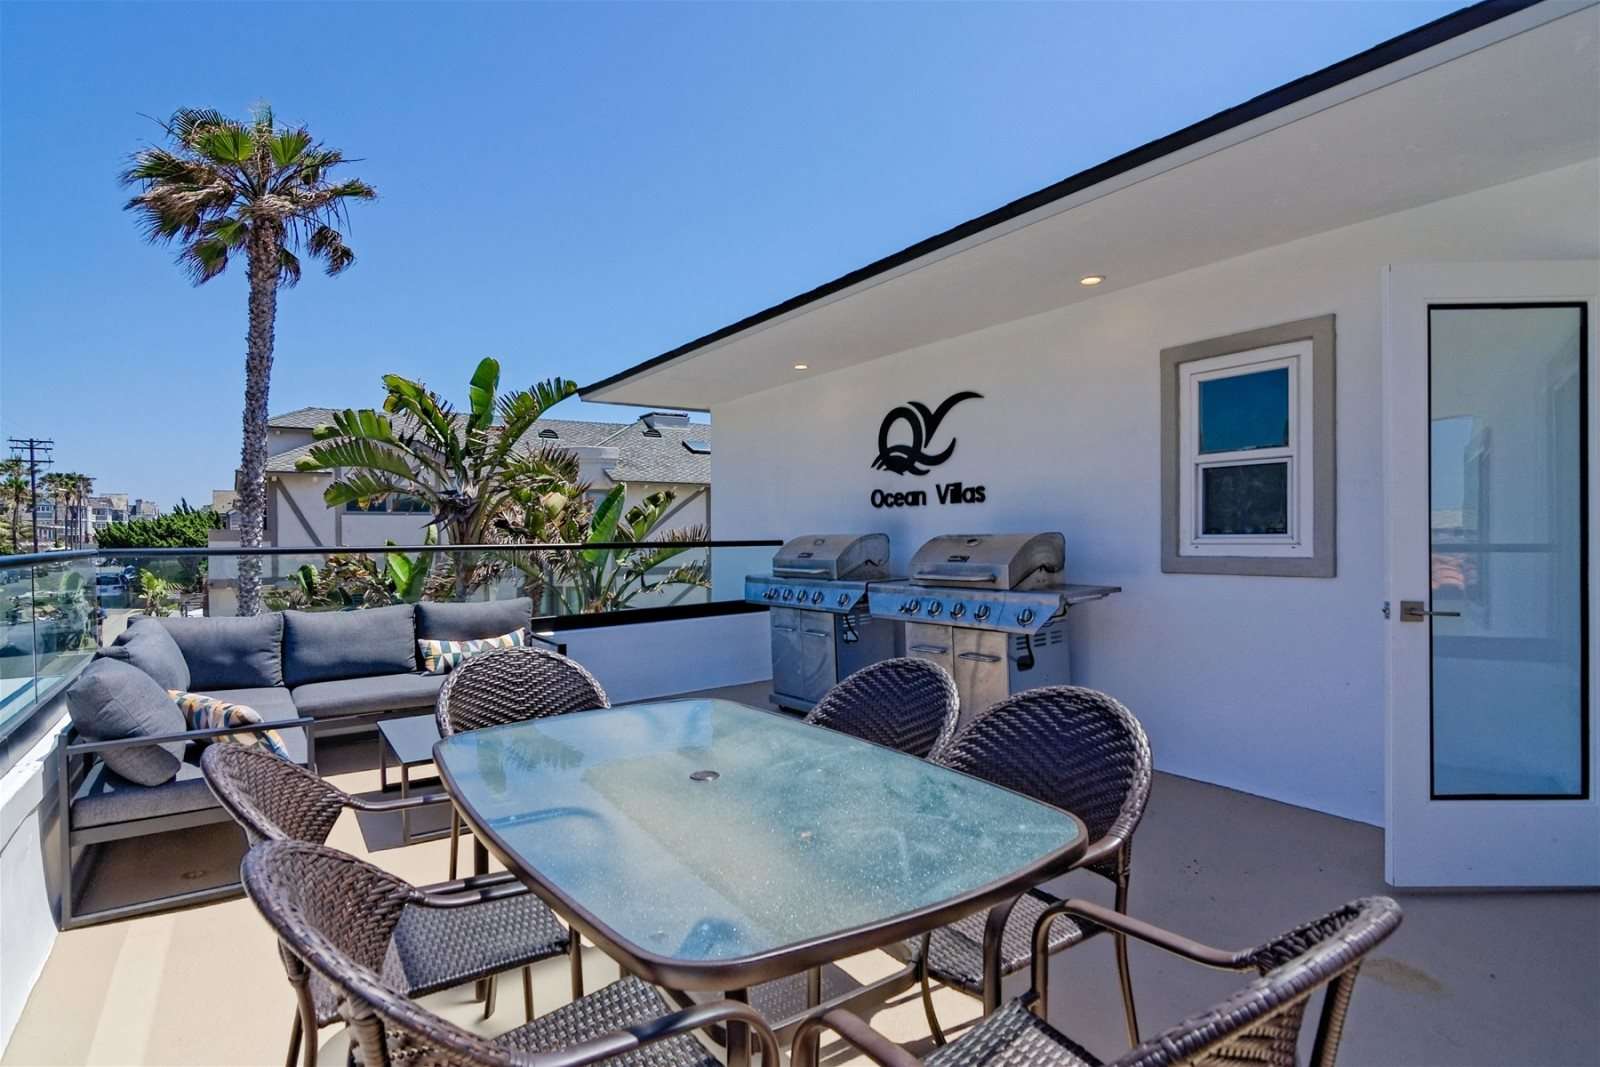 Luxury beachfront vacation rental in Carlsbad, California